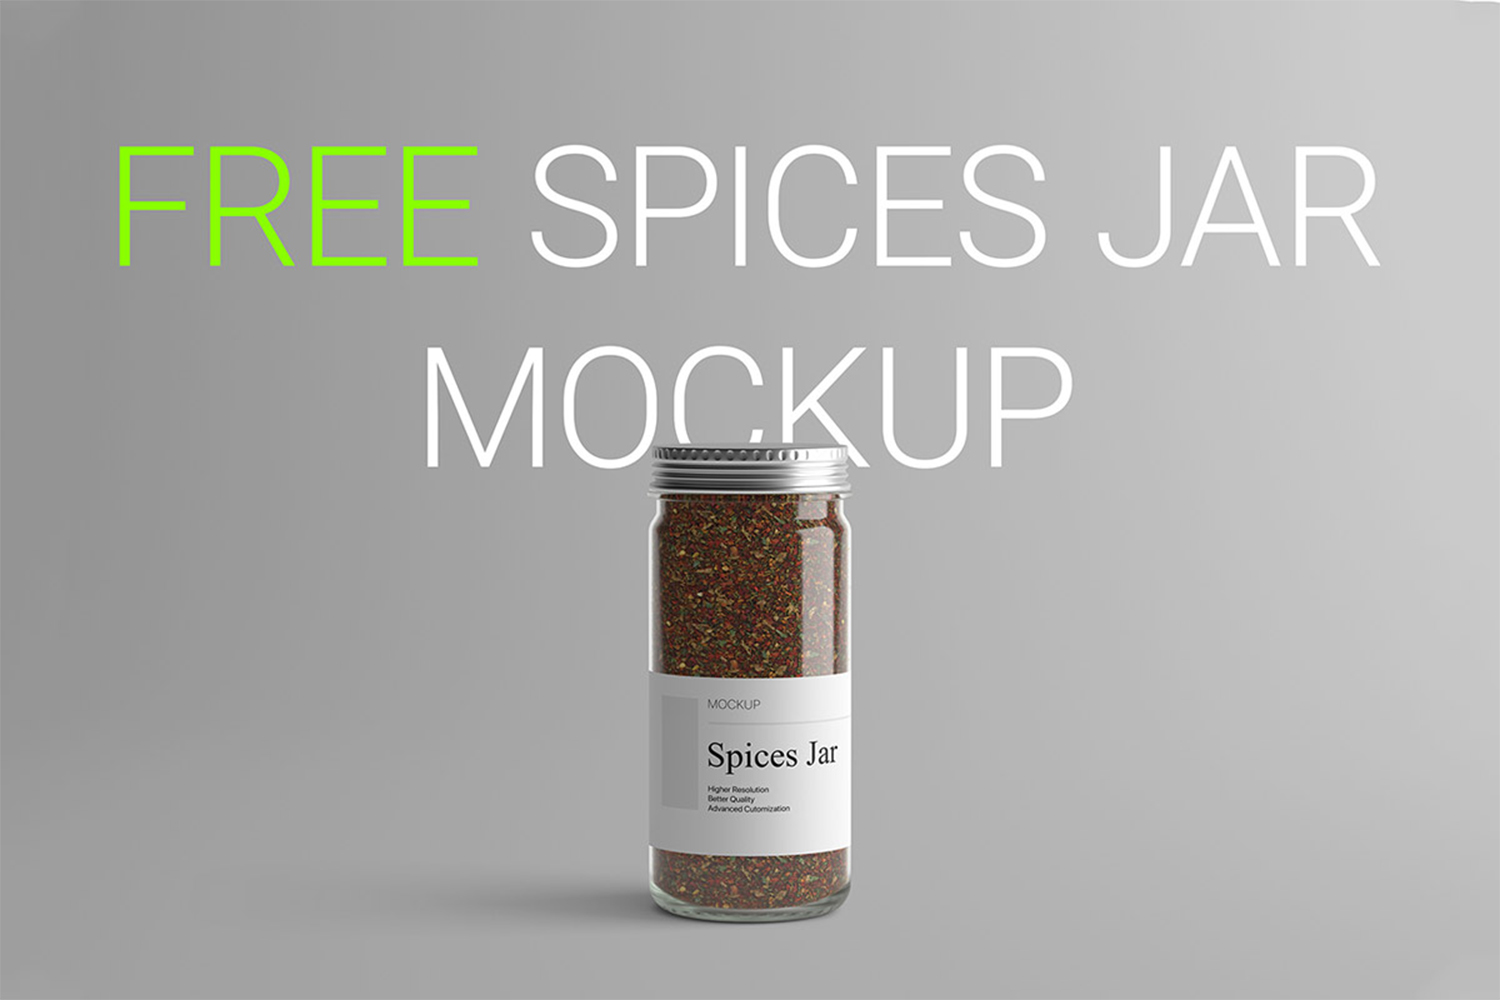 Spices Jar Mockup Free Download